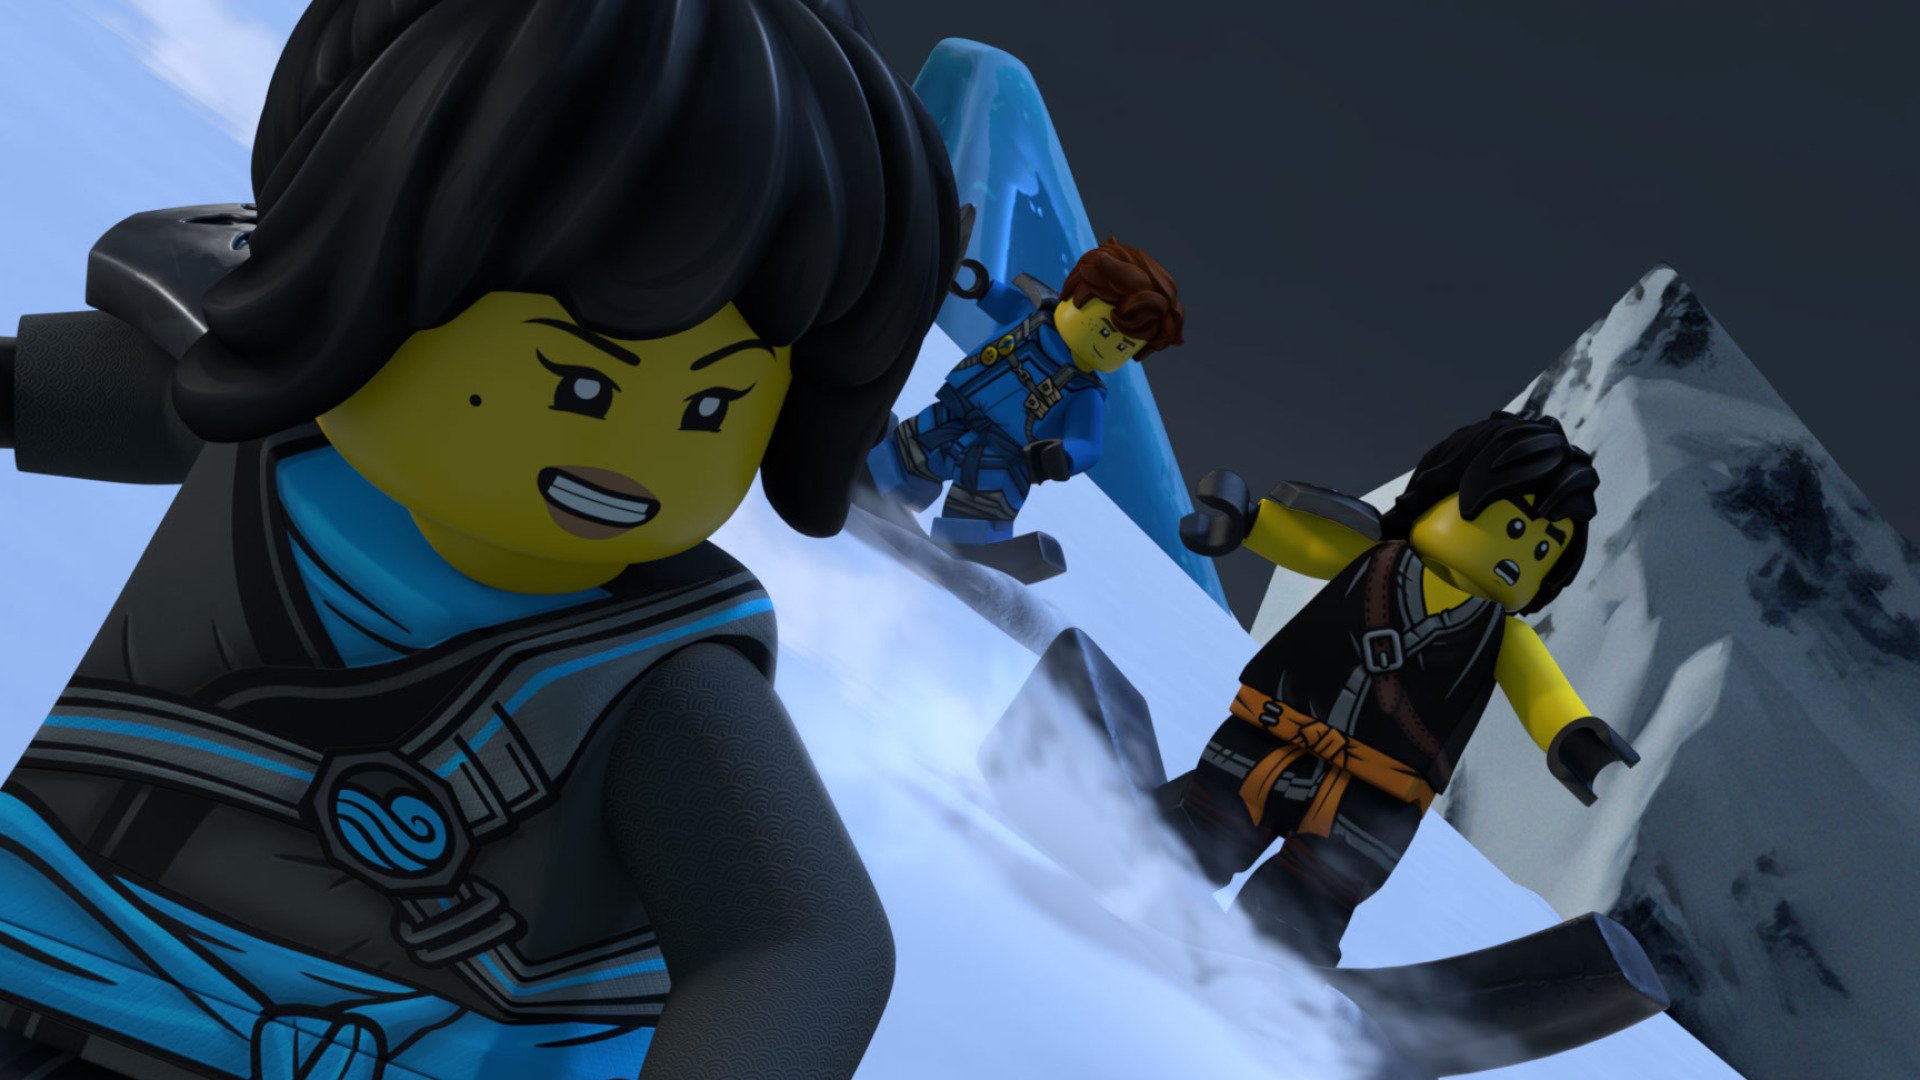 LEGO Ninjago: Secret Of The Forbidden Spinjitsu 1 Episode Online - Stream Full